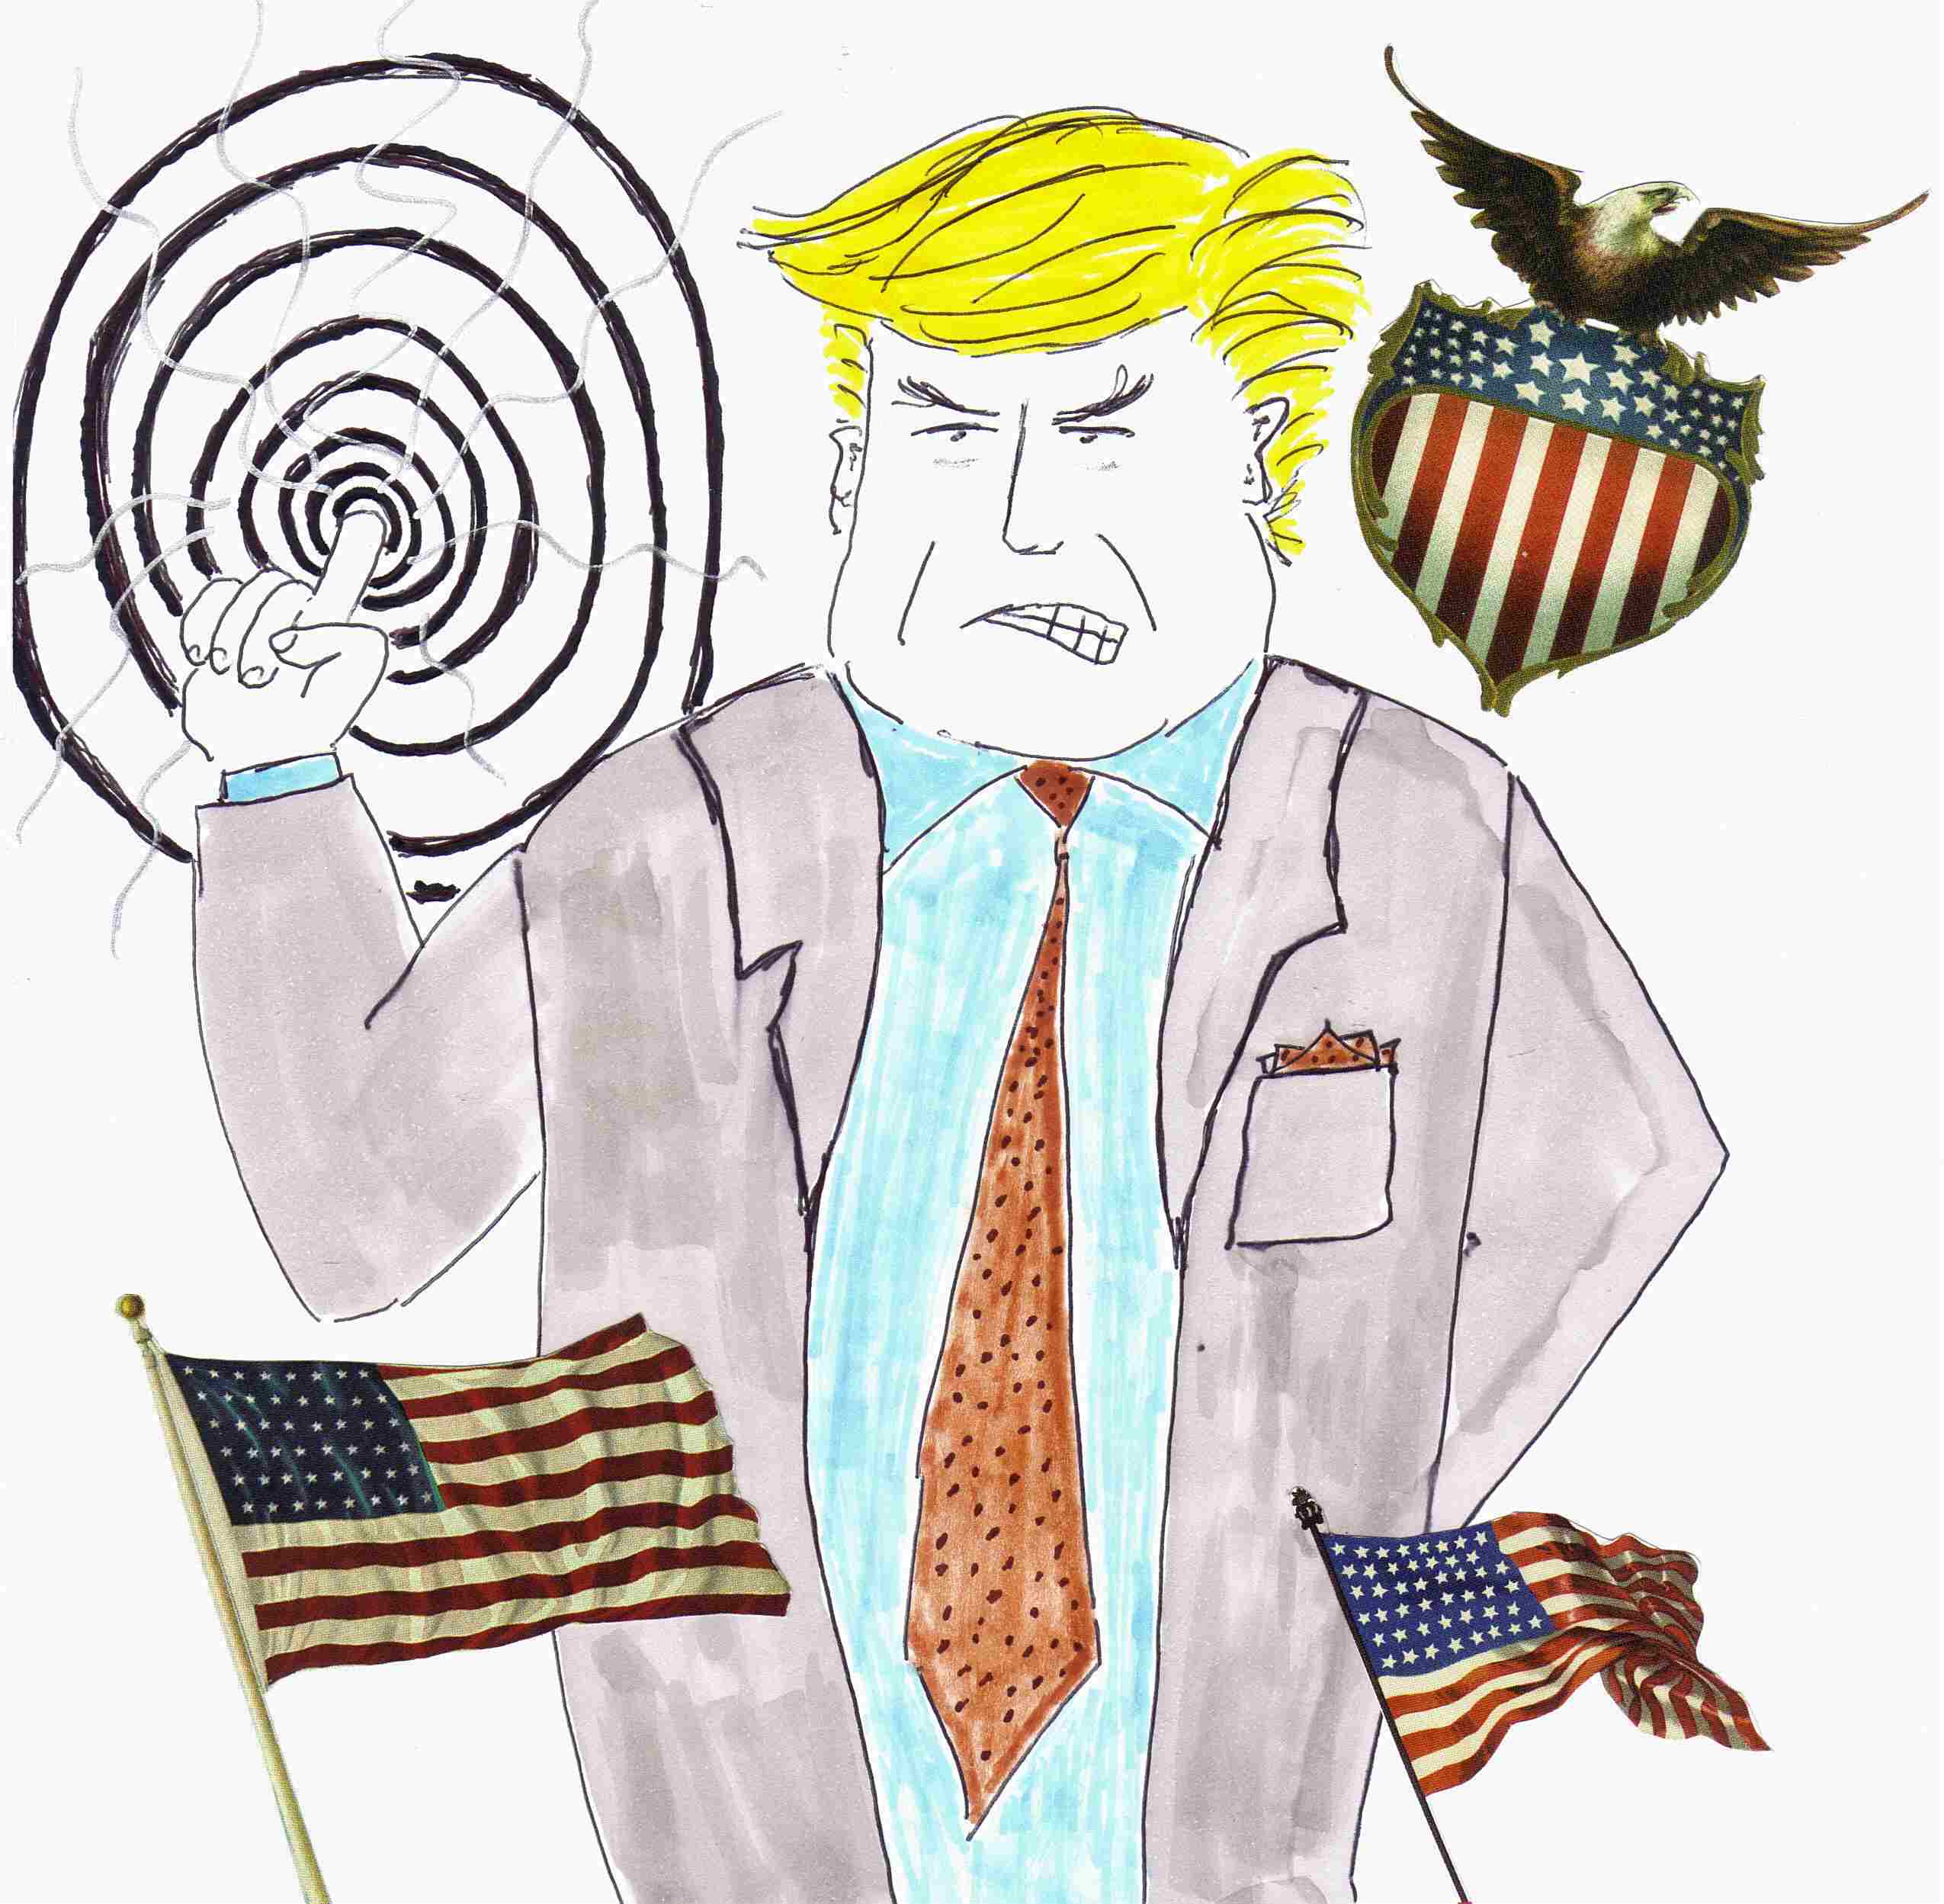 Is Donald Trump a master at hypnosis